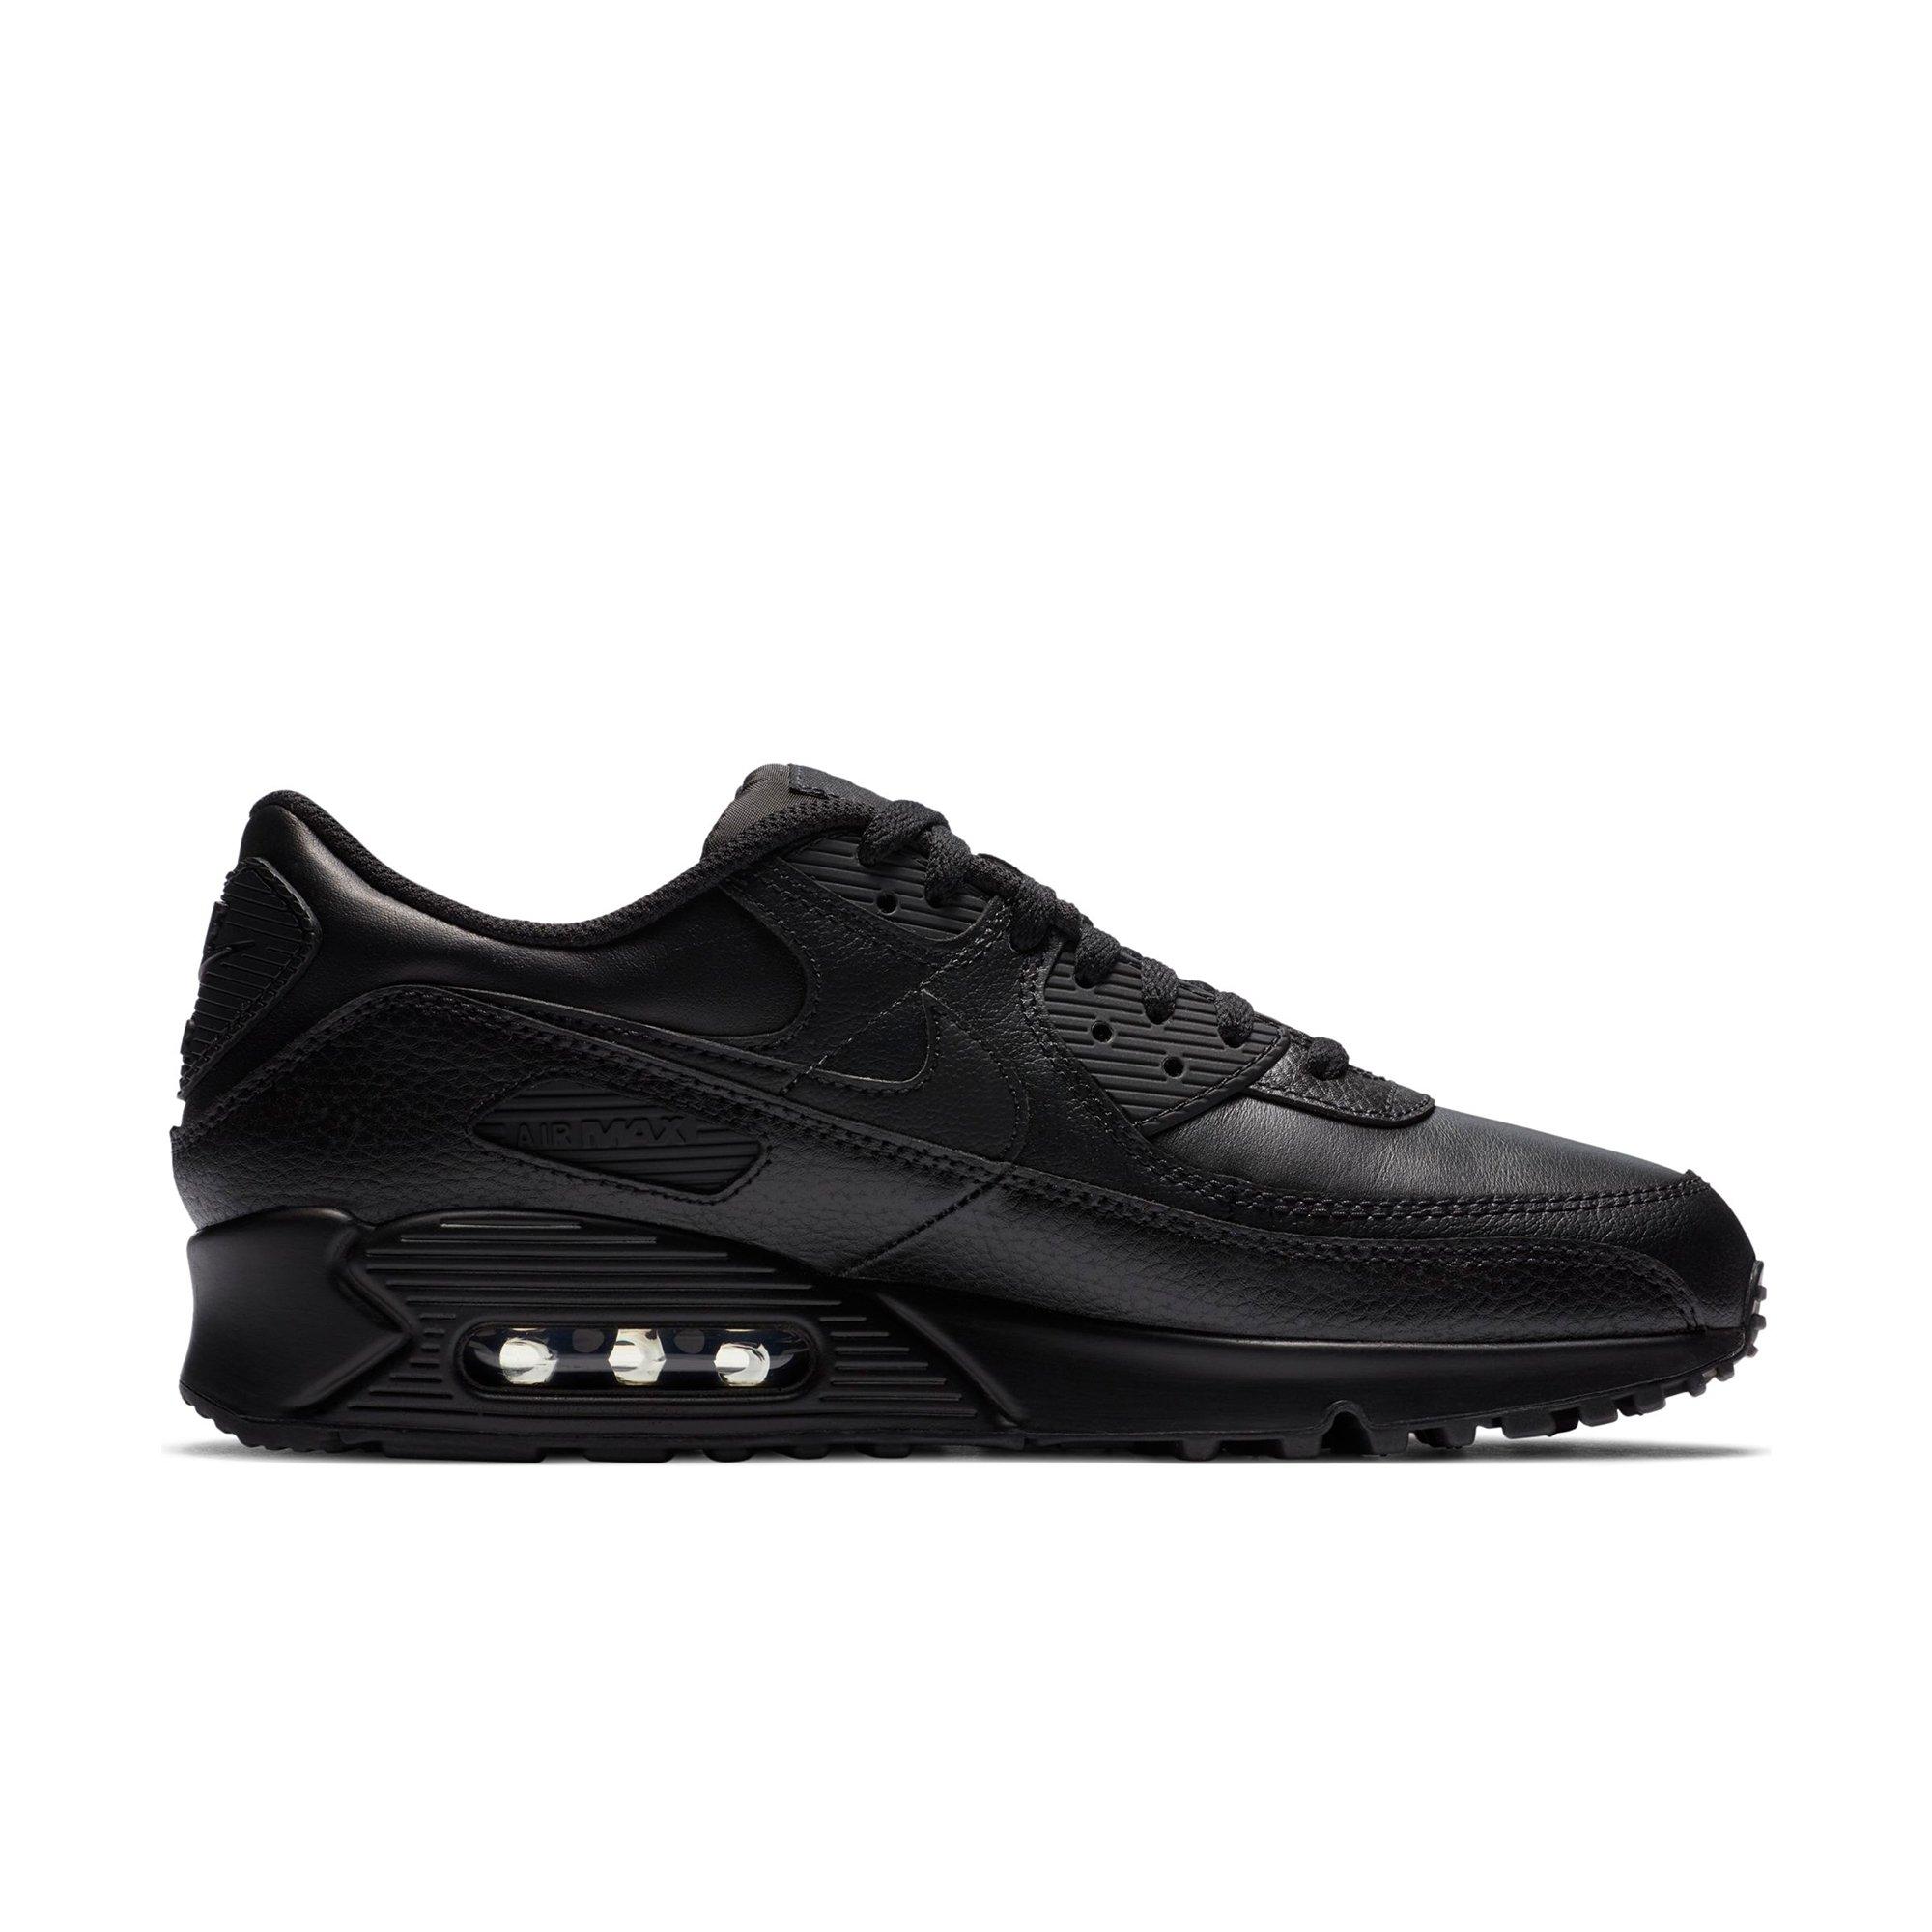 Nike Air Max 90 "Black" Shoes